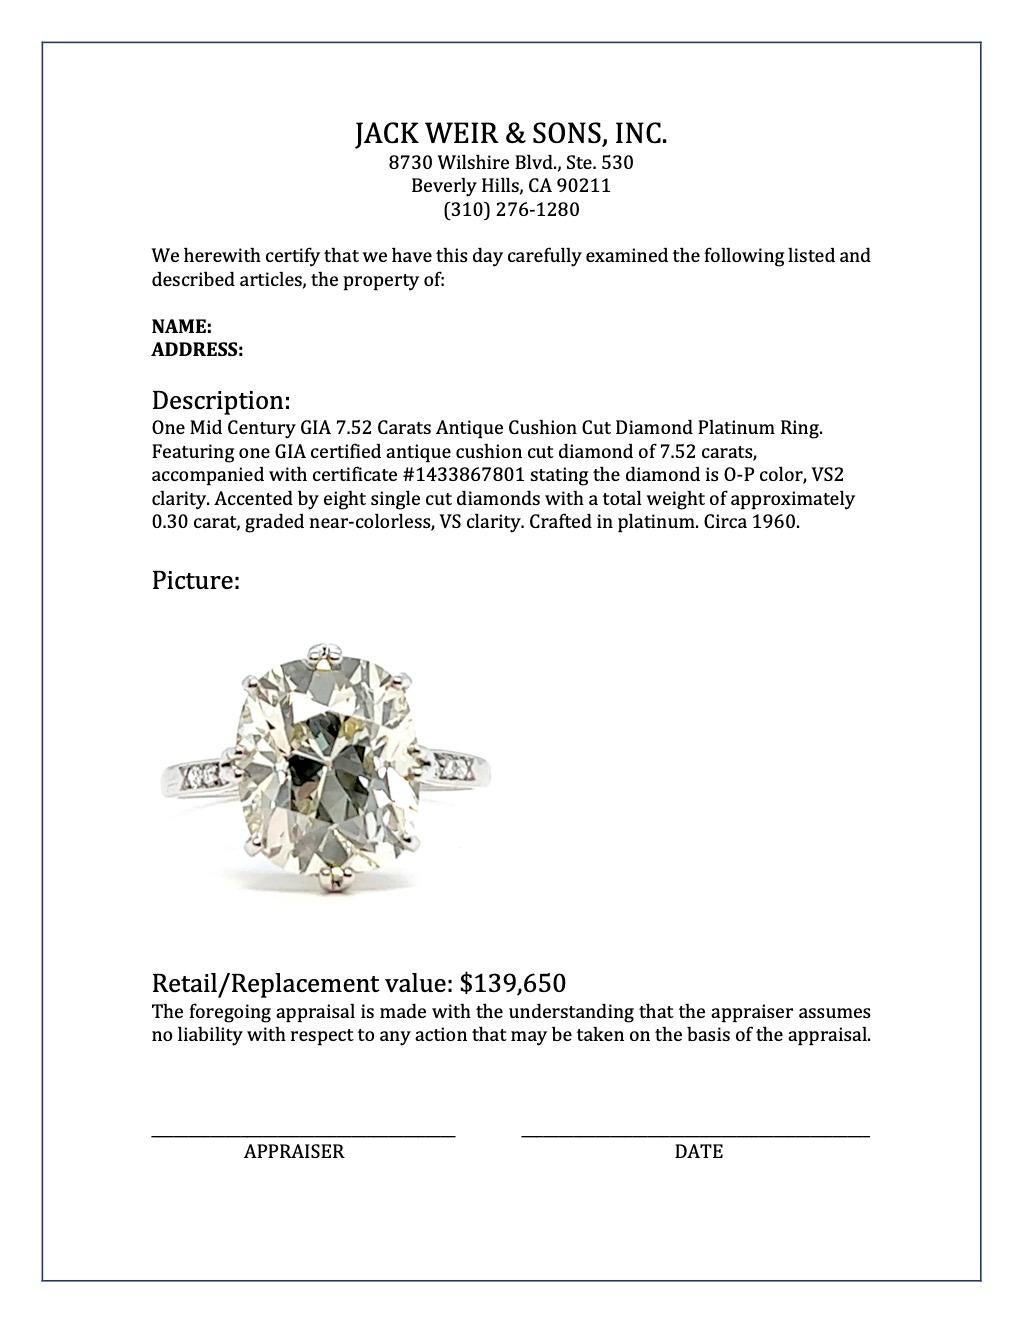 Mid Century GIA 7.52 Carats Antique Cushion Cut Diamond Platinum Ring For Sale 4